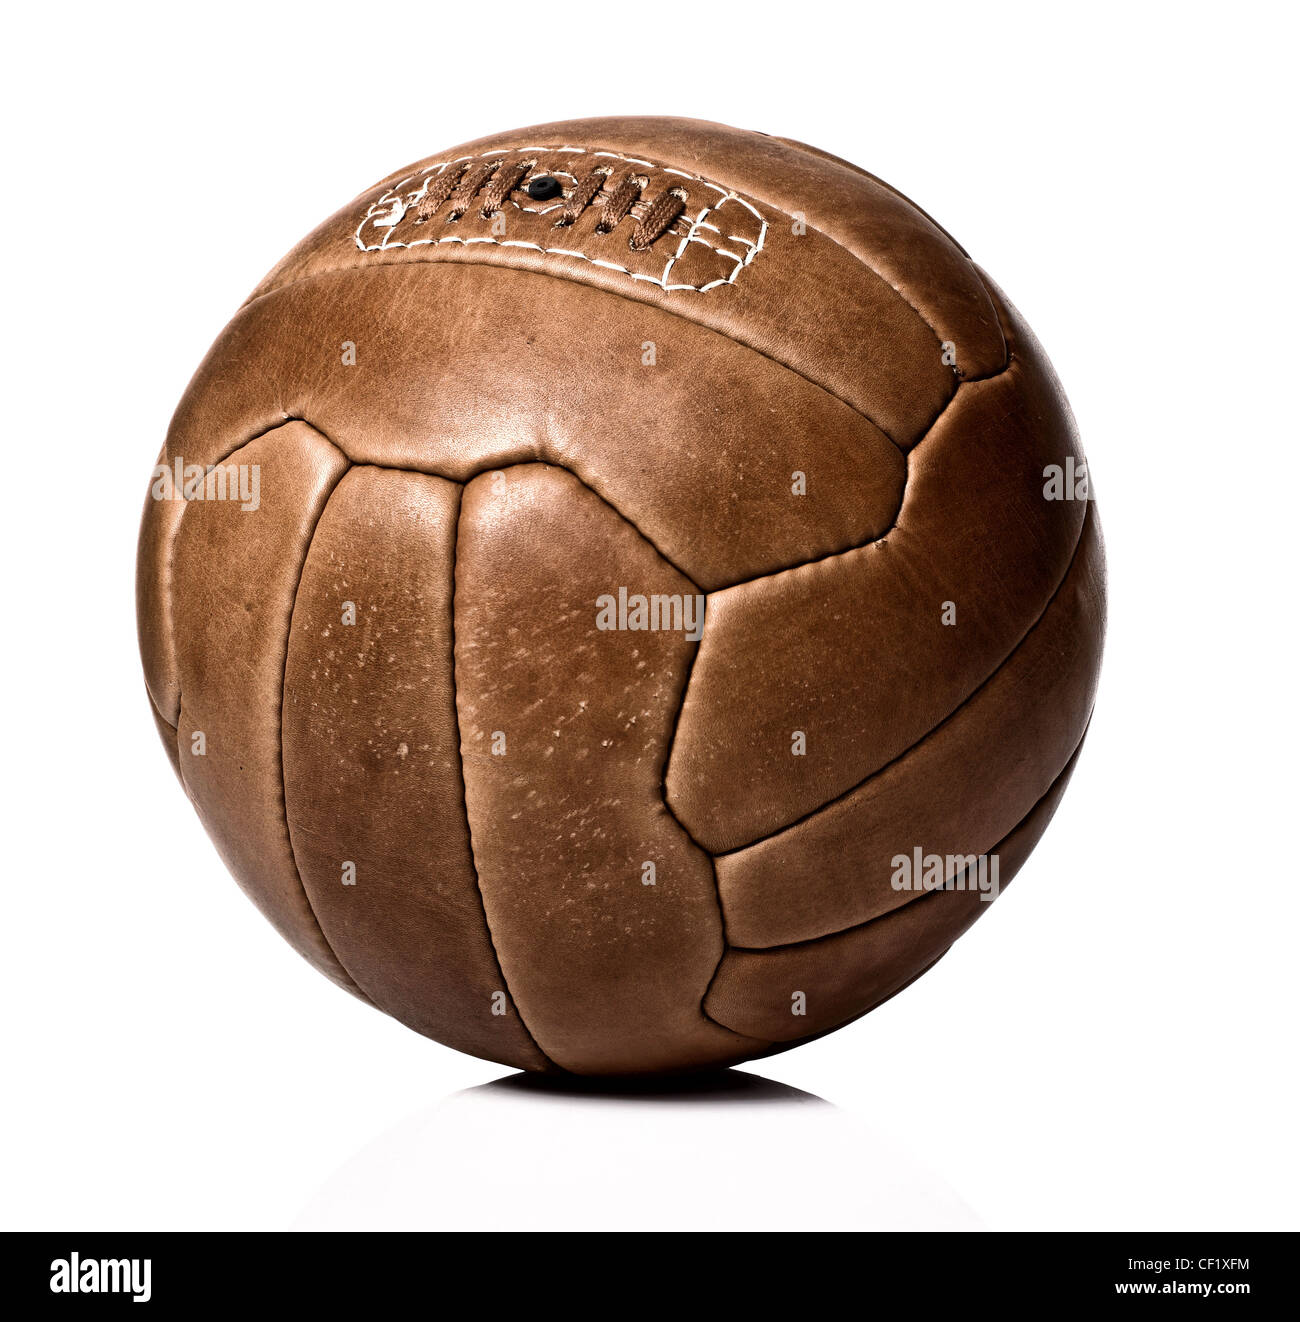 Image de ballon de football en cuir rétro Banque D'Images